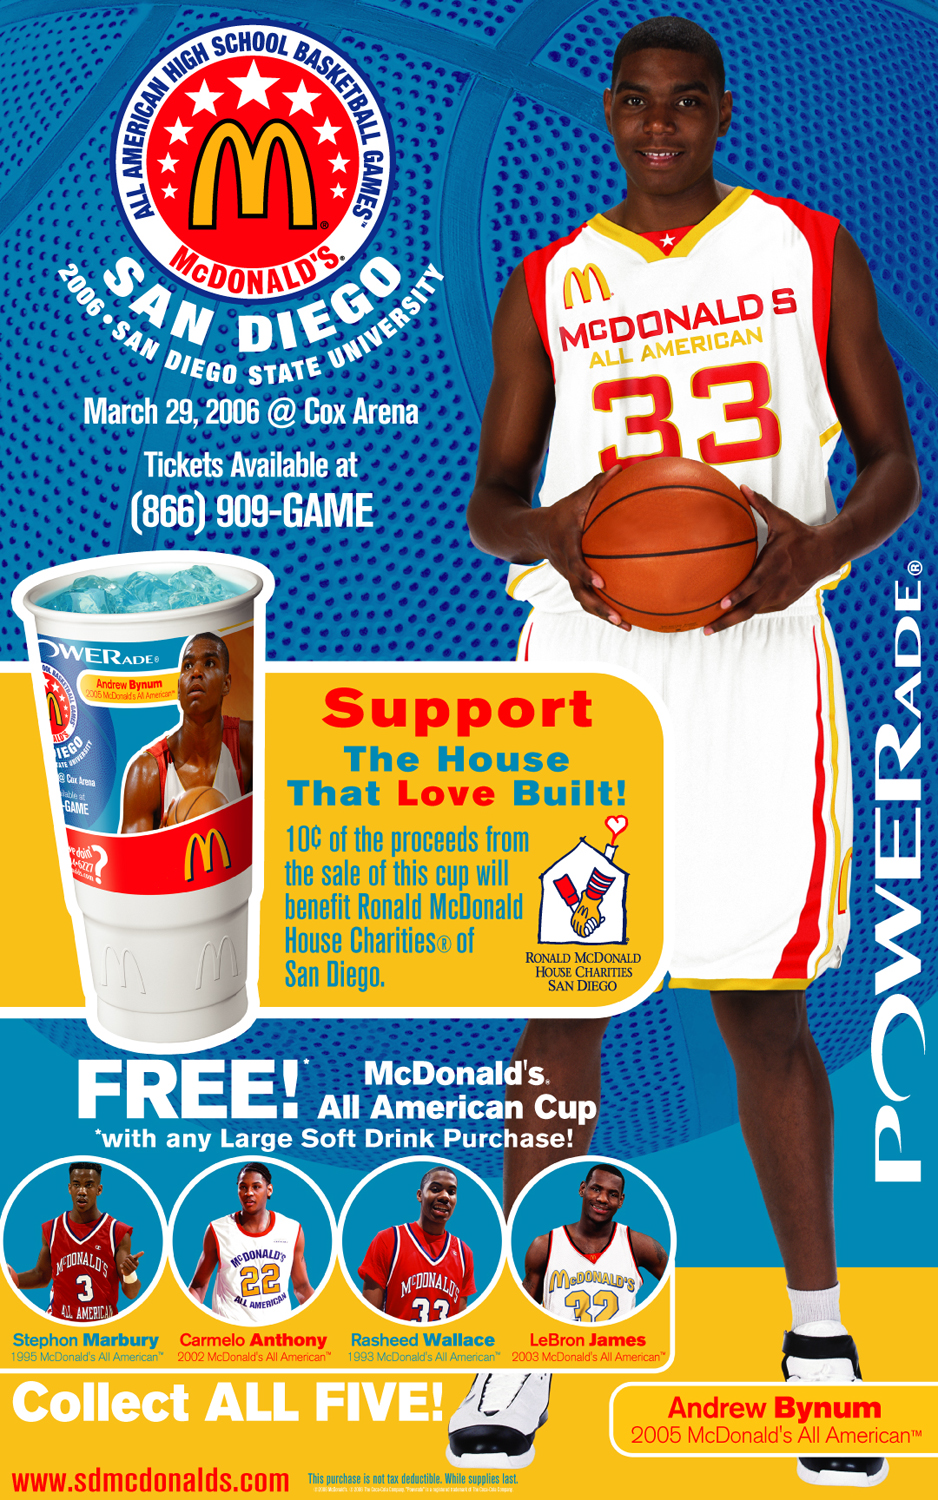 McDonald's All American High School Basketball Games Case Study